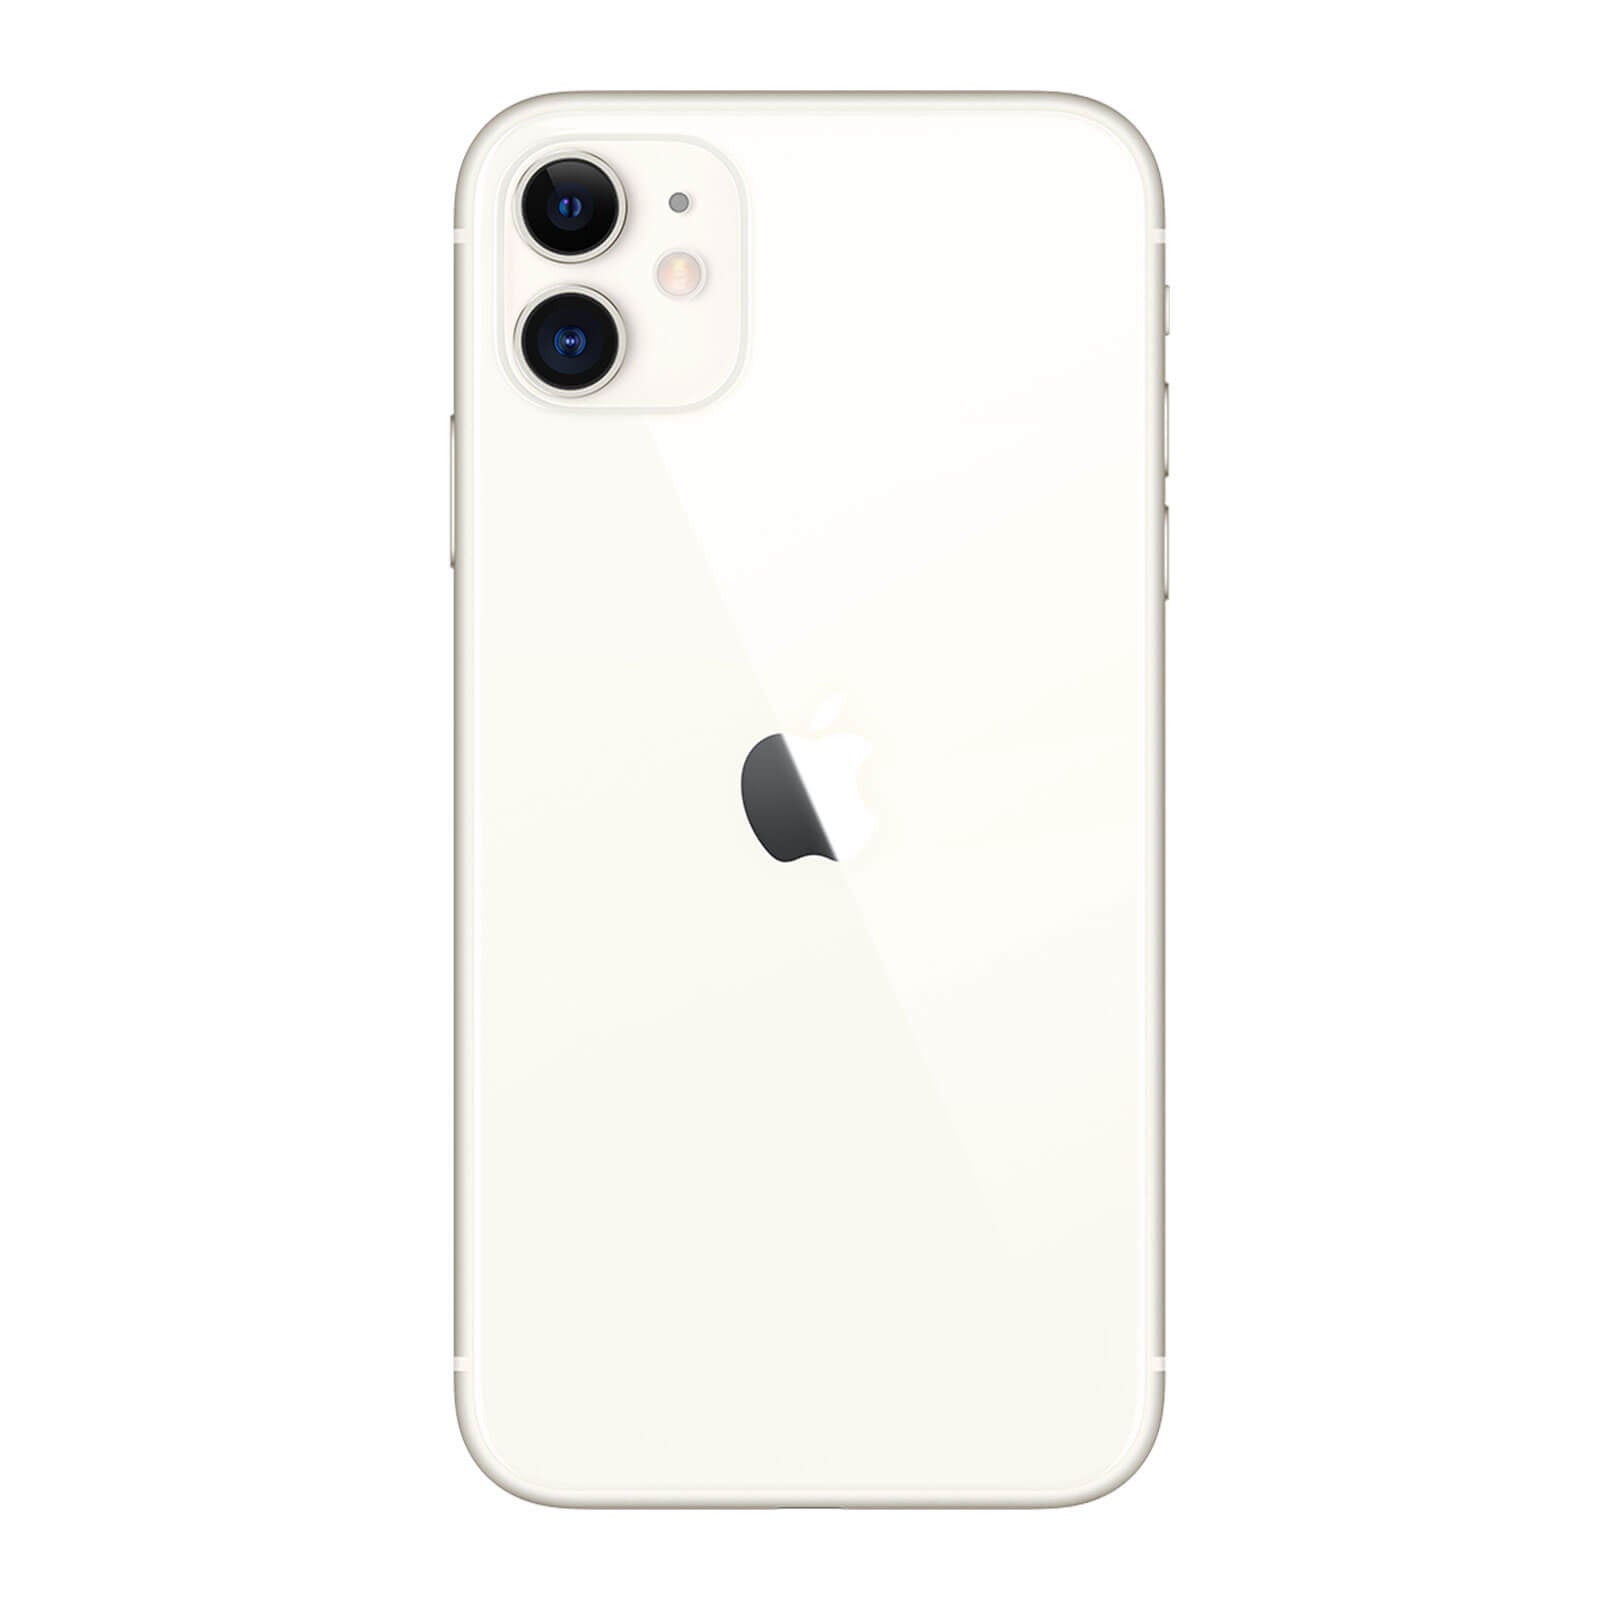 Apple iPhone 11 64GB White Pristine - Sprint